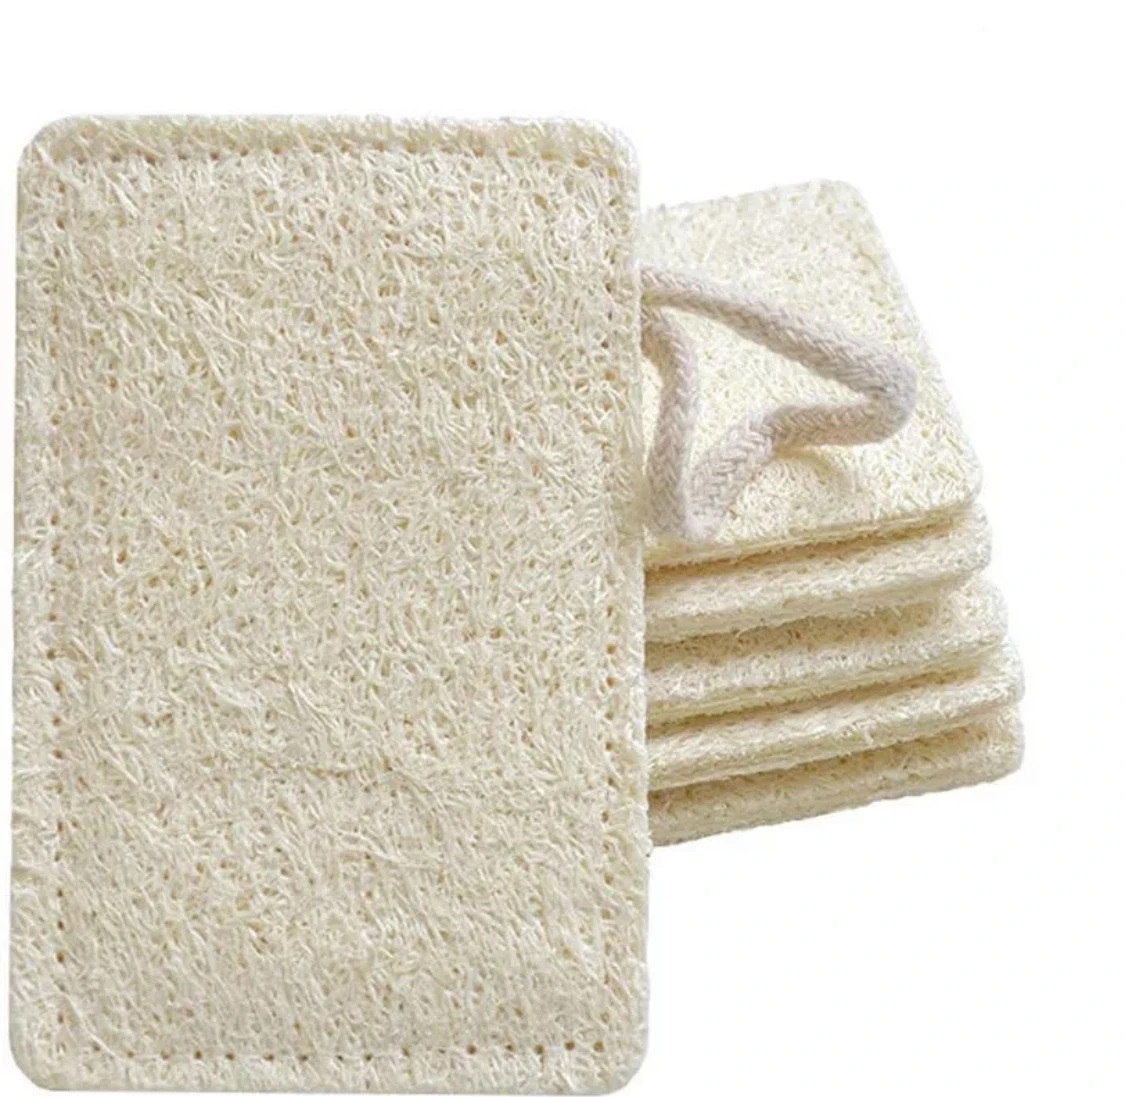 natural kitchen sponges